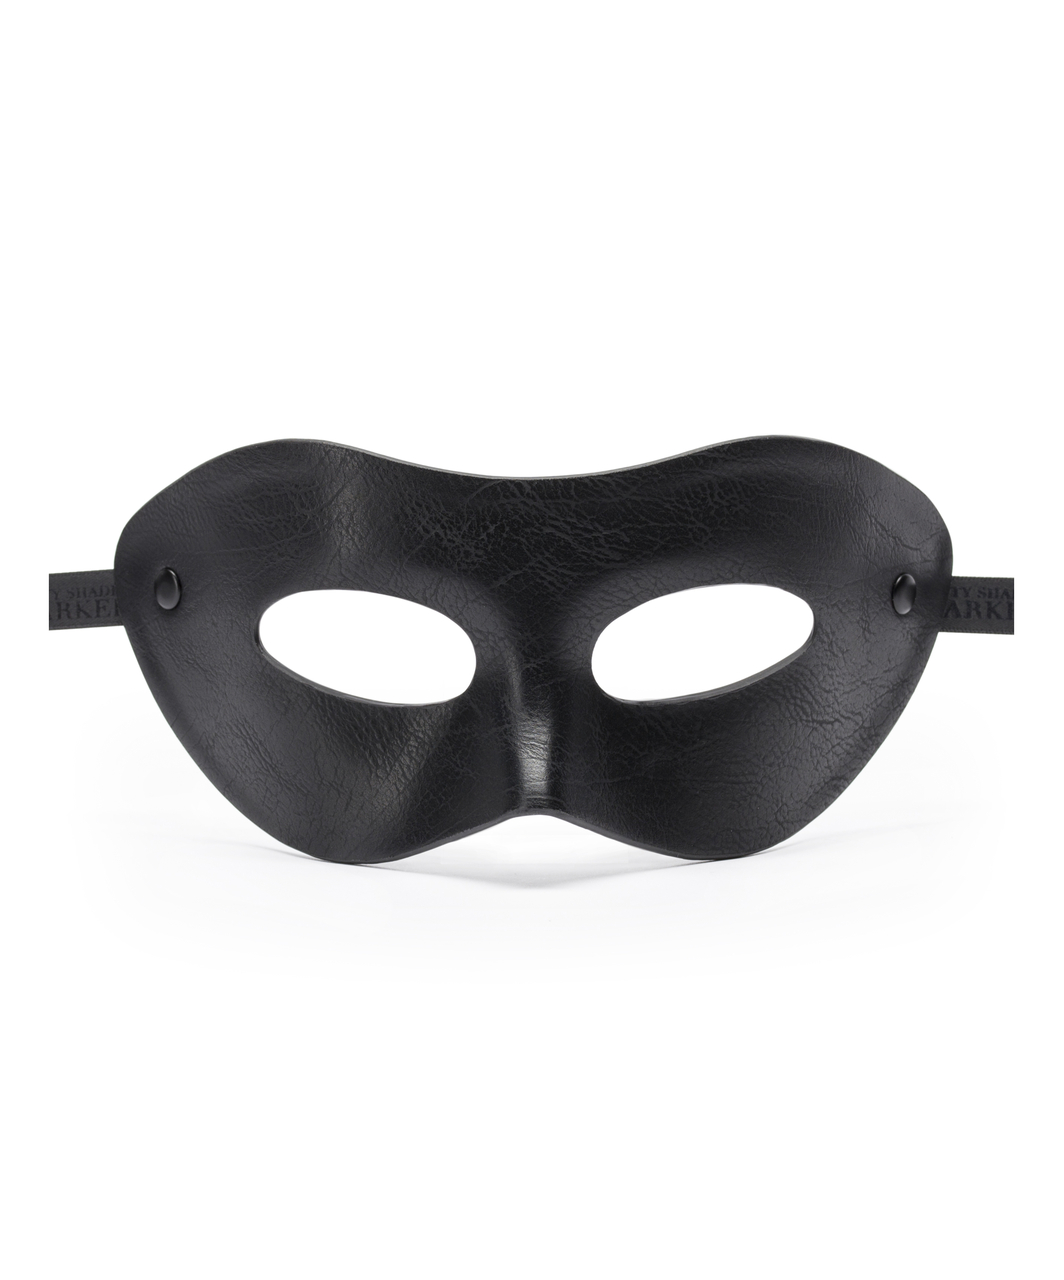 Fifty Shades of Grey Darker Secret Prince Masquerade Mask